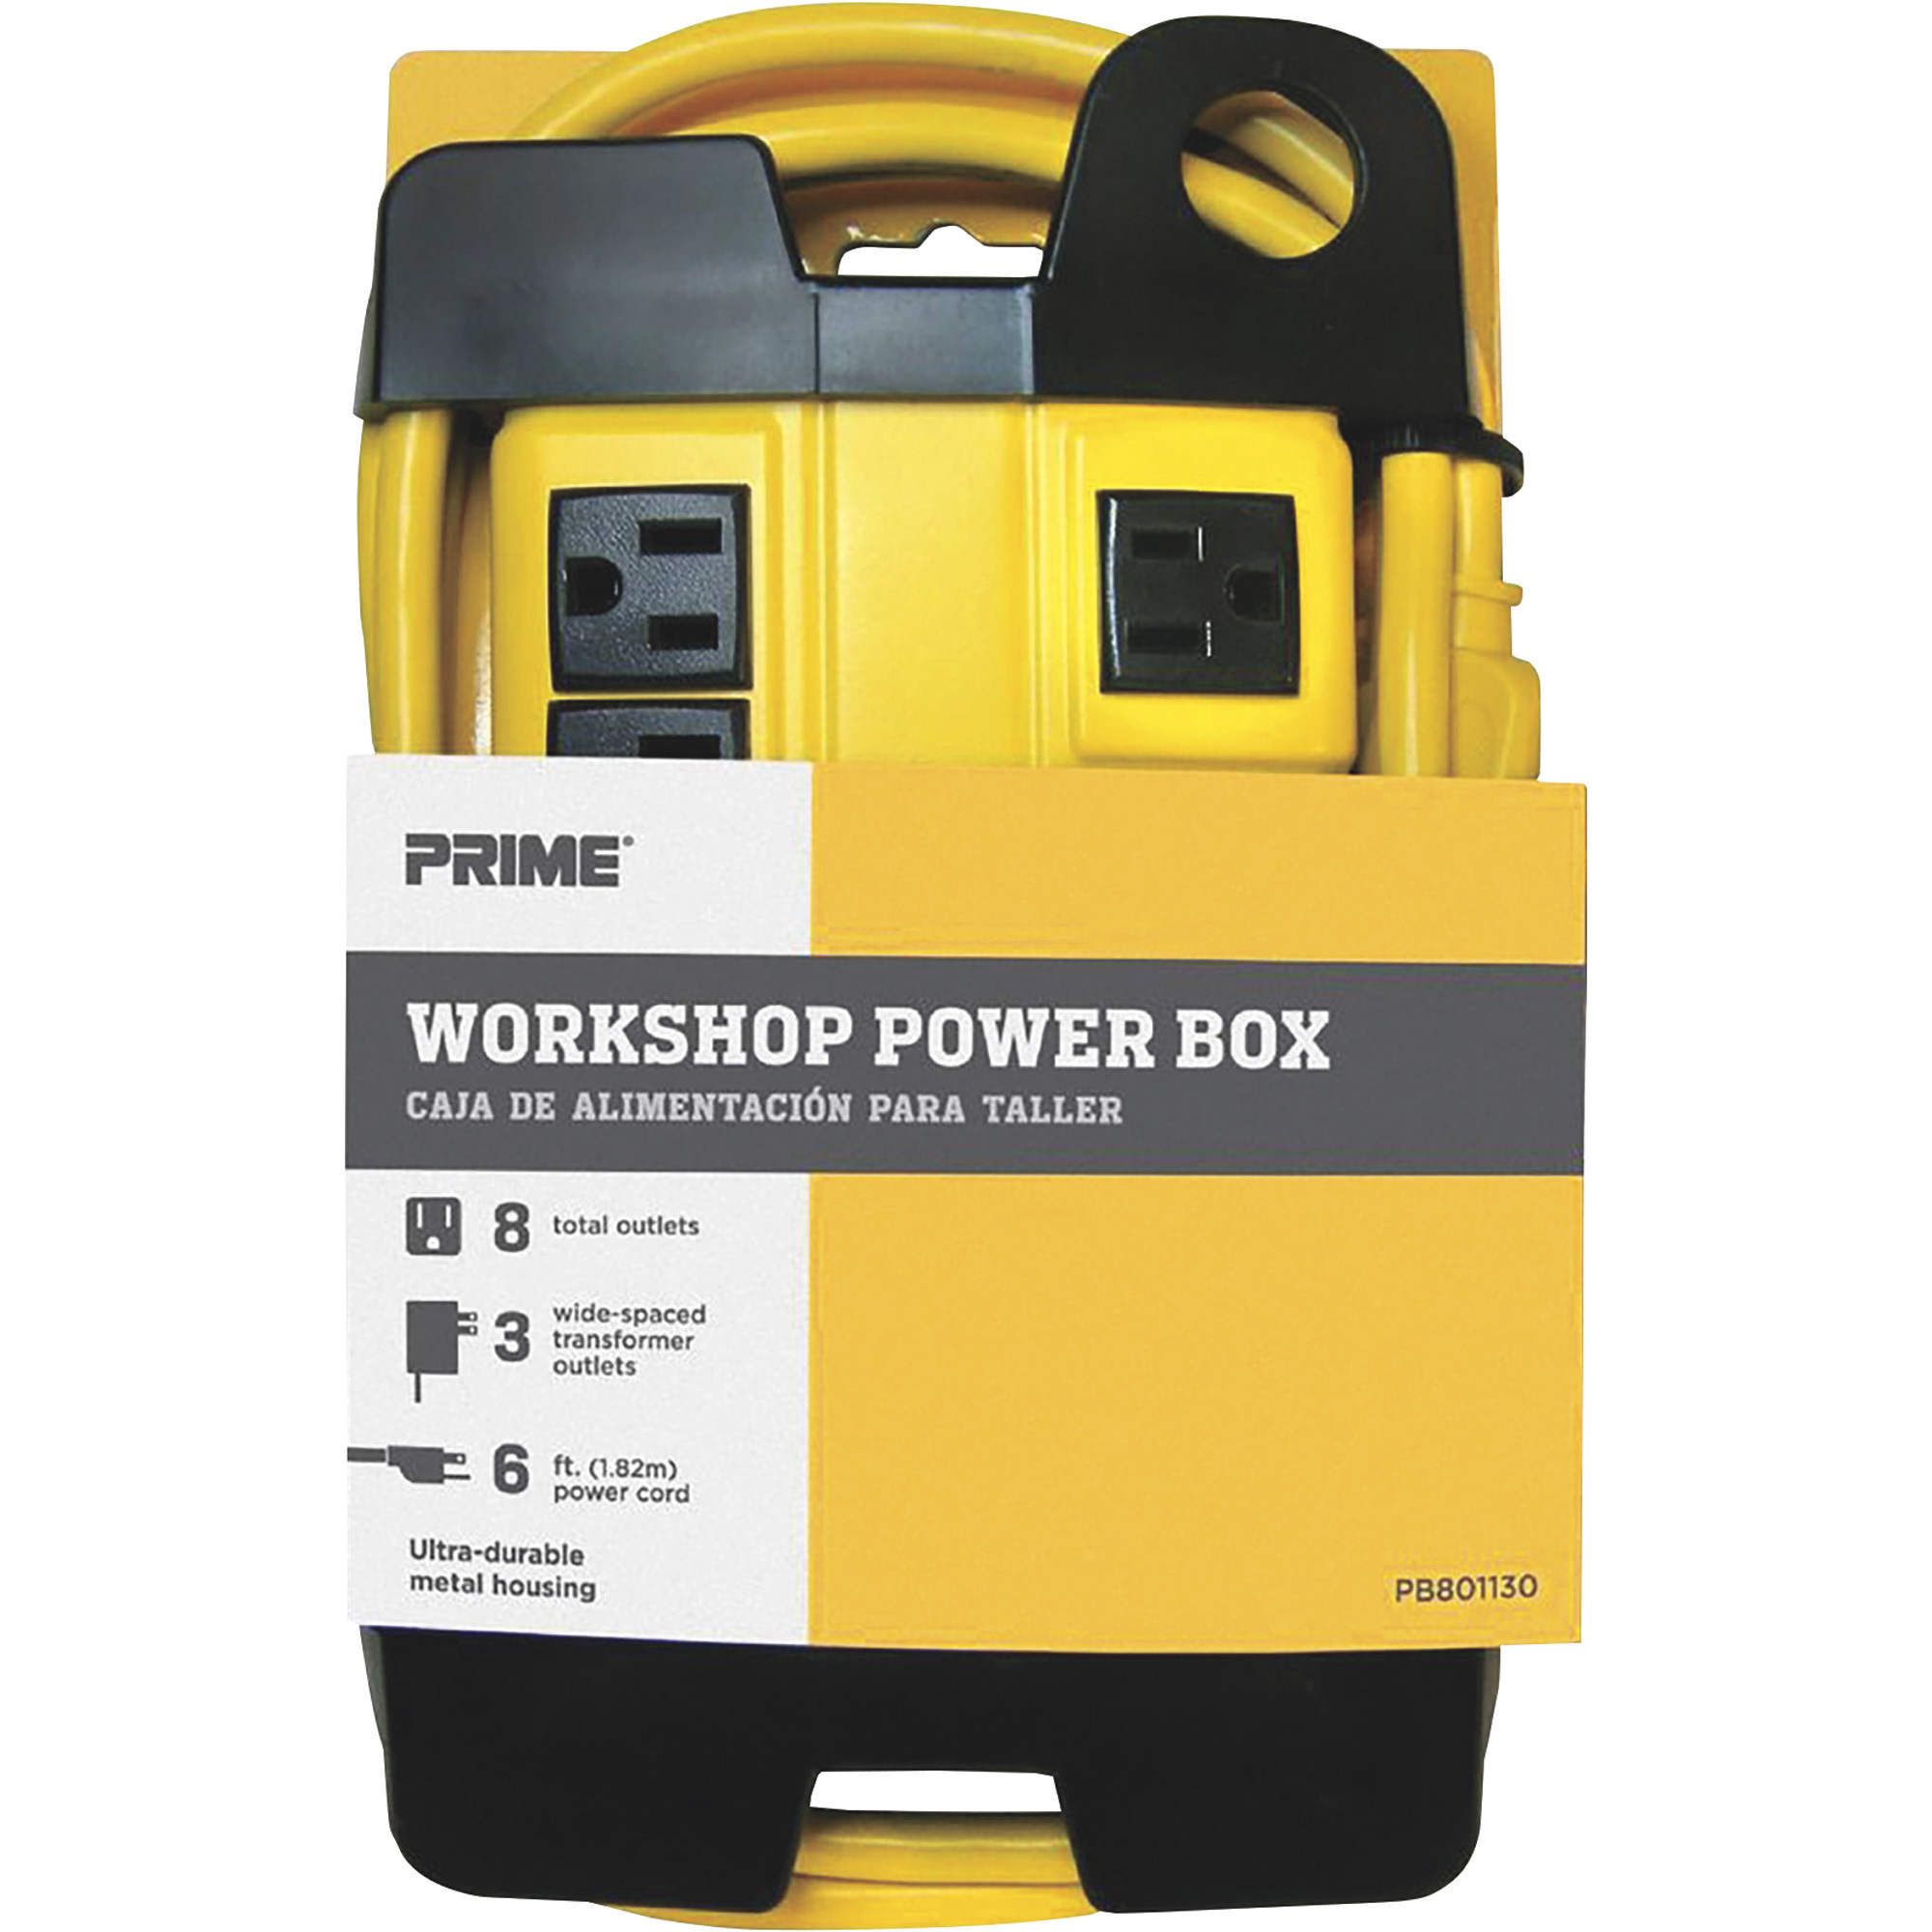 Prime 8-Outlet Workshop Power Box â 6ft.L, Model PB801130